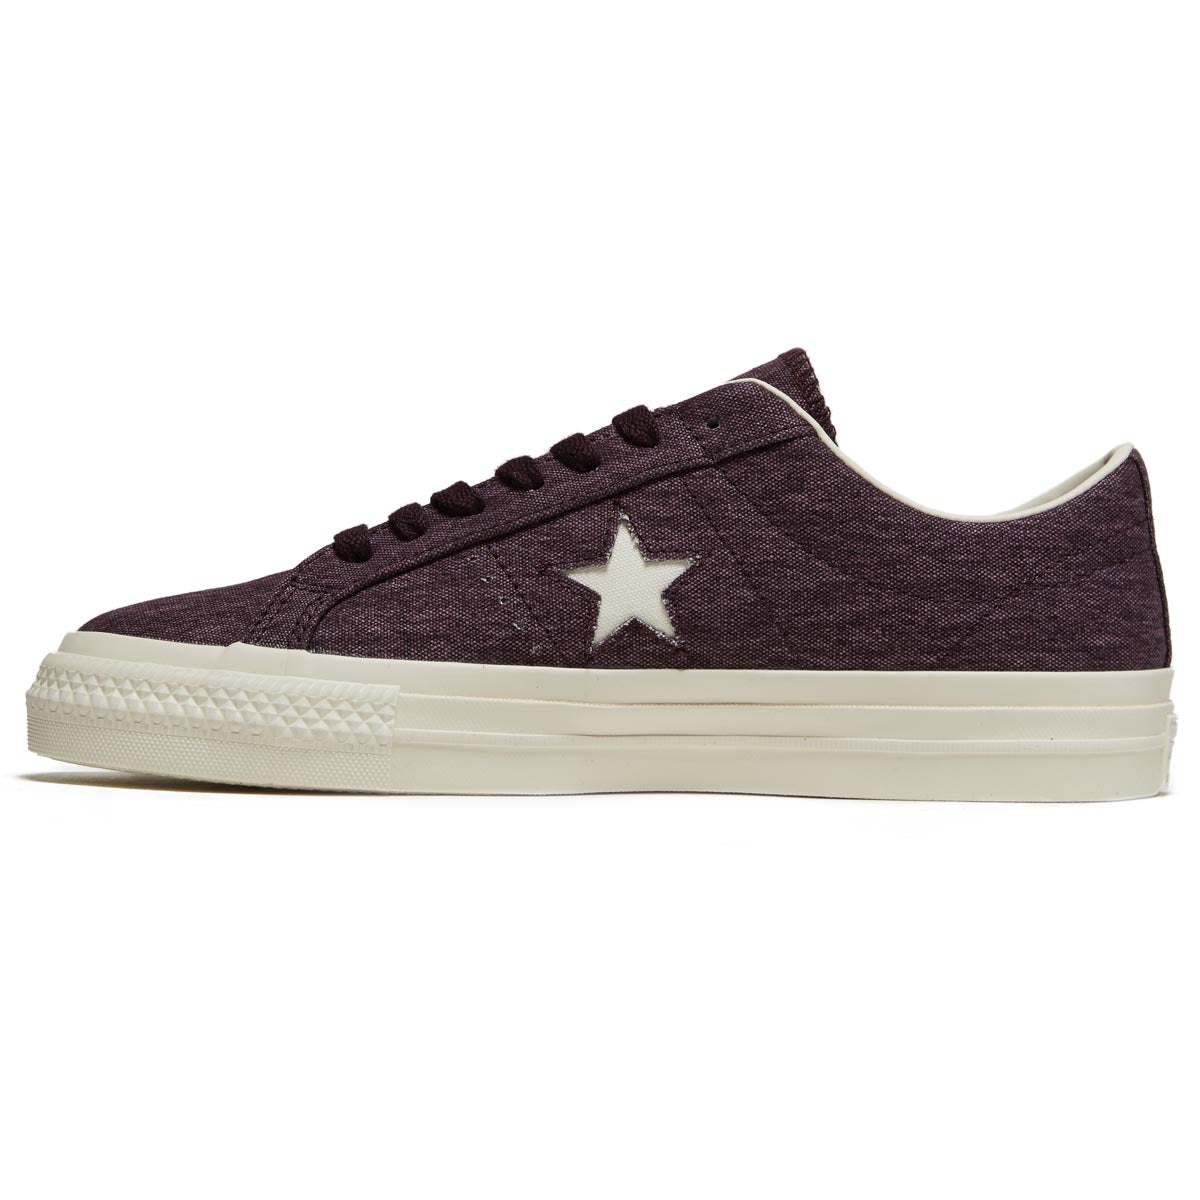 Converse One Star Pro Shoes - Black Cherry/Egret image 2